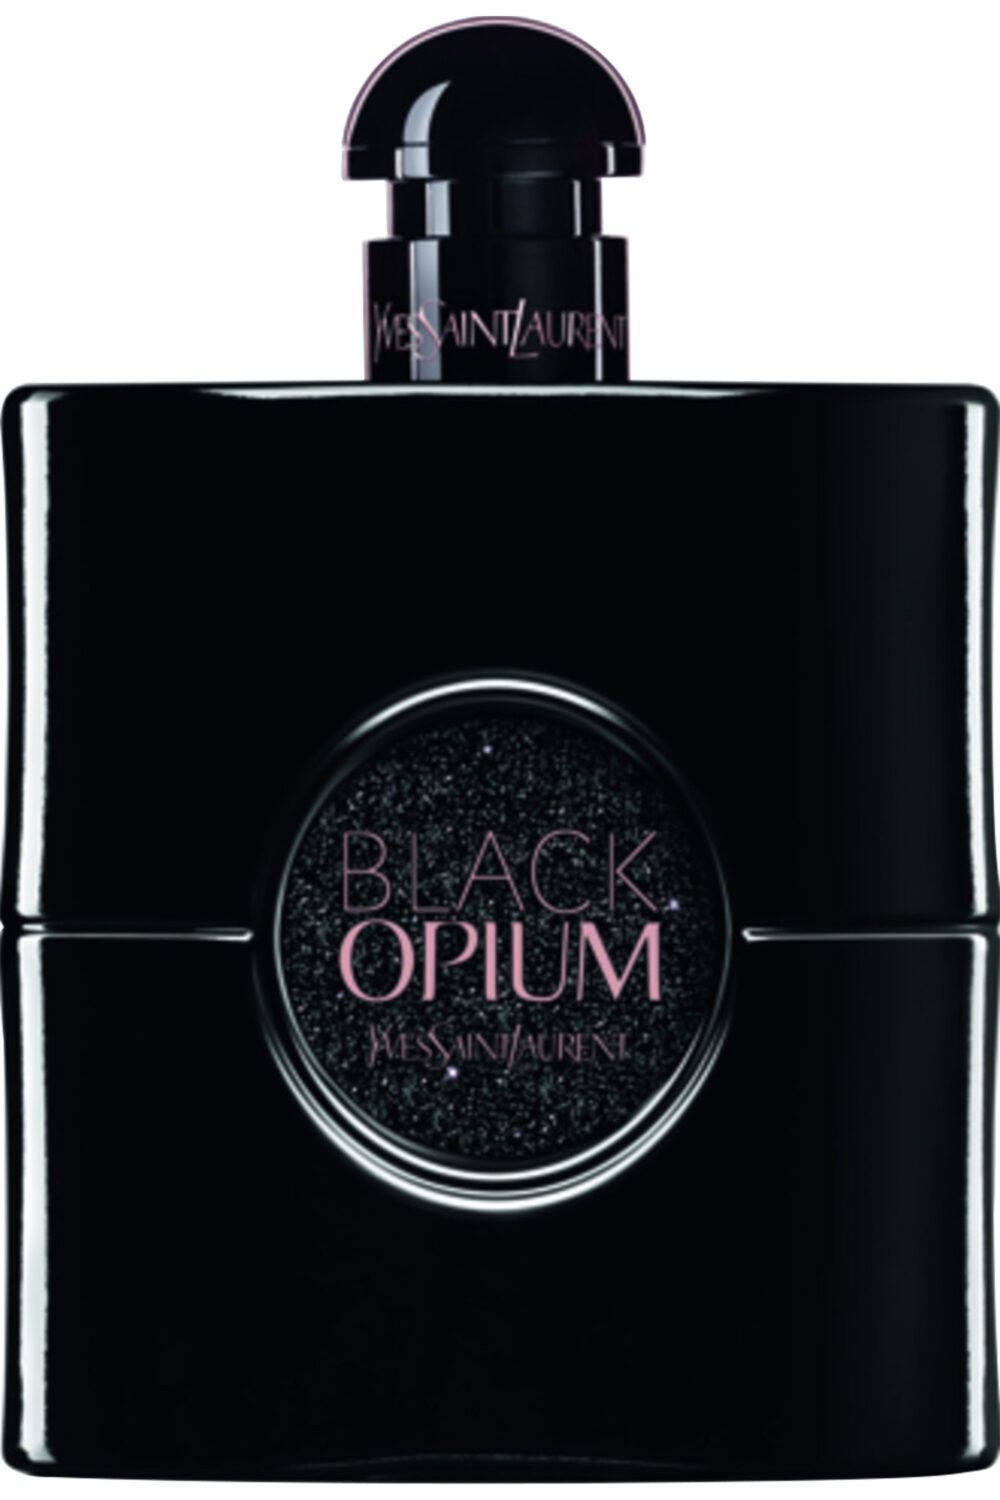 Yves Saint Laurent - Black Opium Le Parfum 90ml